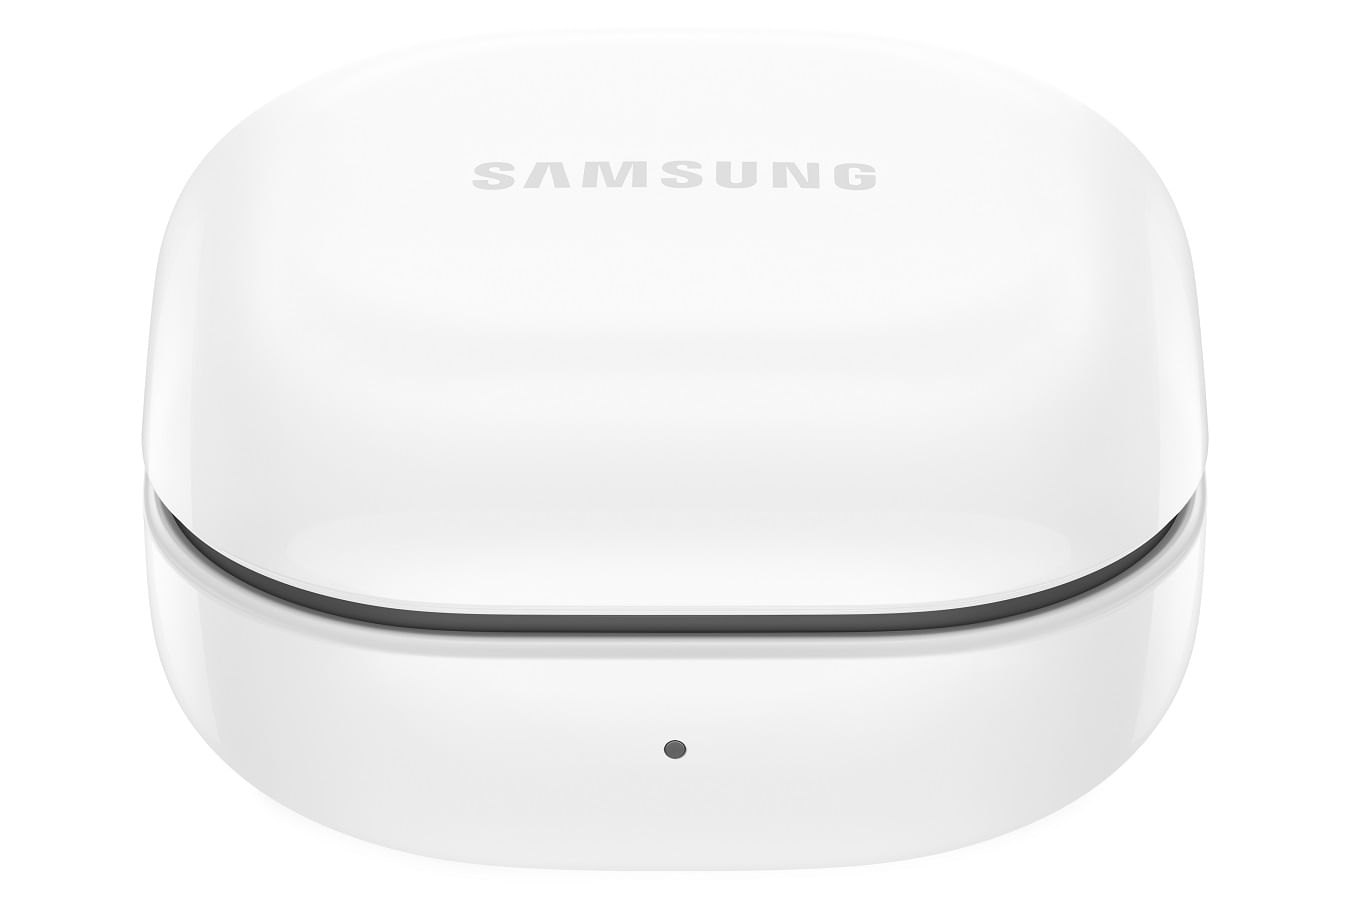 SAMSUNG Galaxy S21 FE 5G teléfono celular, teléfono inteligente Android  desbloqueado de fábrica, 256 GB Galaxy Buds 2 auriculares Bluetooth  inalámbricos verdaderos, grafito : Precio Guatemala